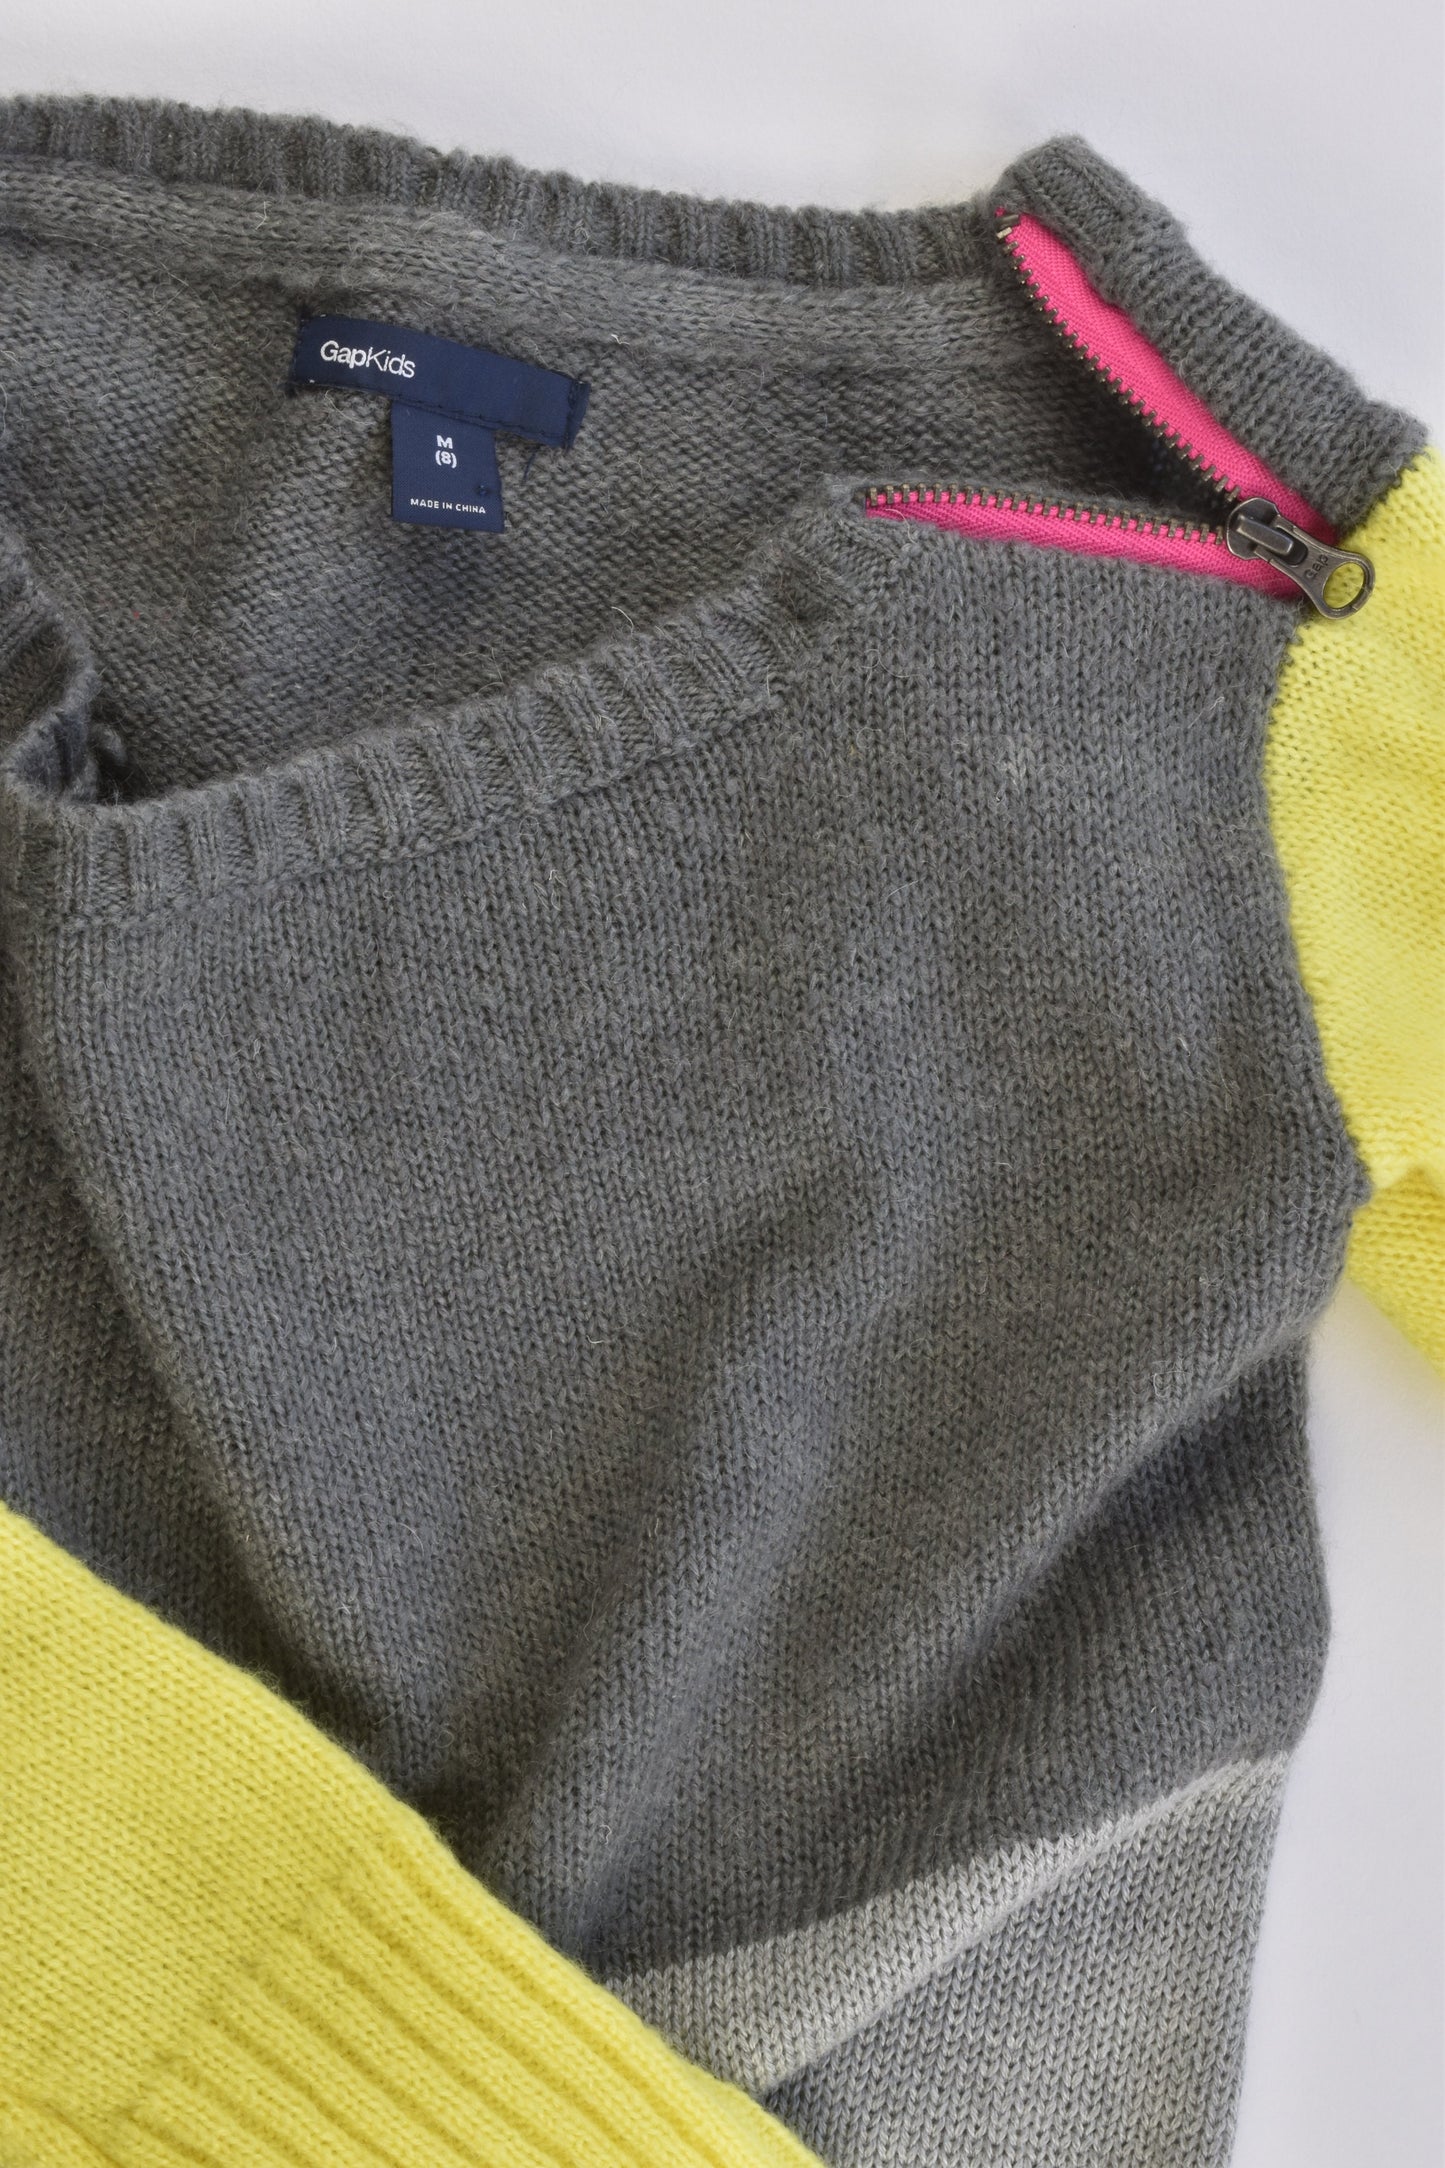 Gap Kids Size 8 (M) Knitted Dress